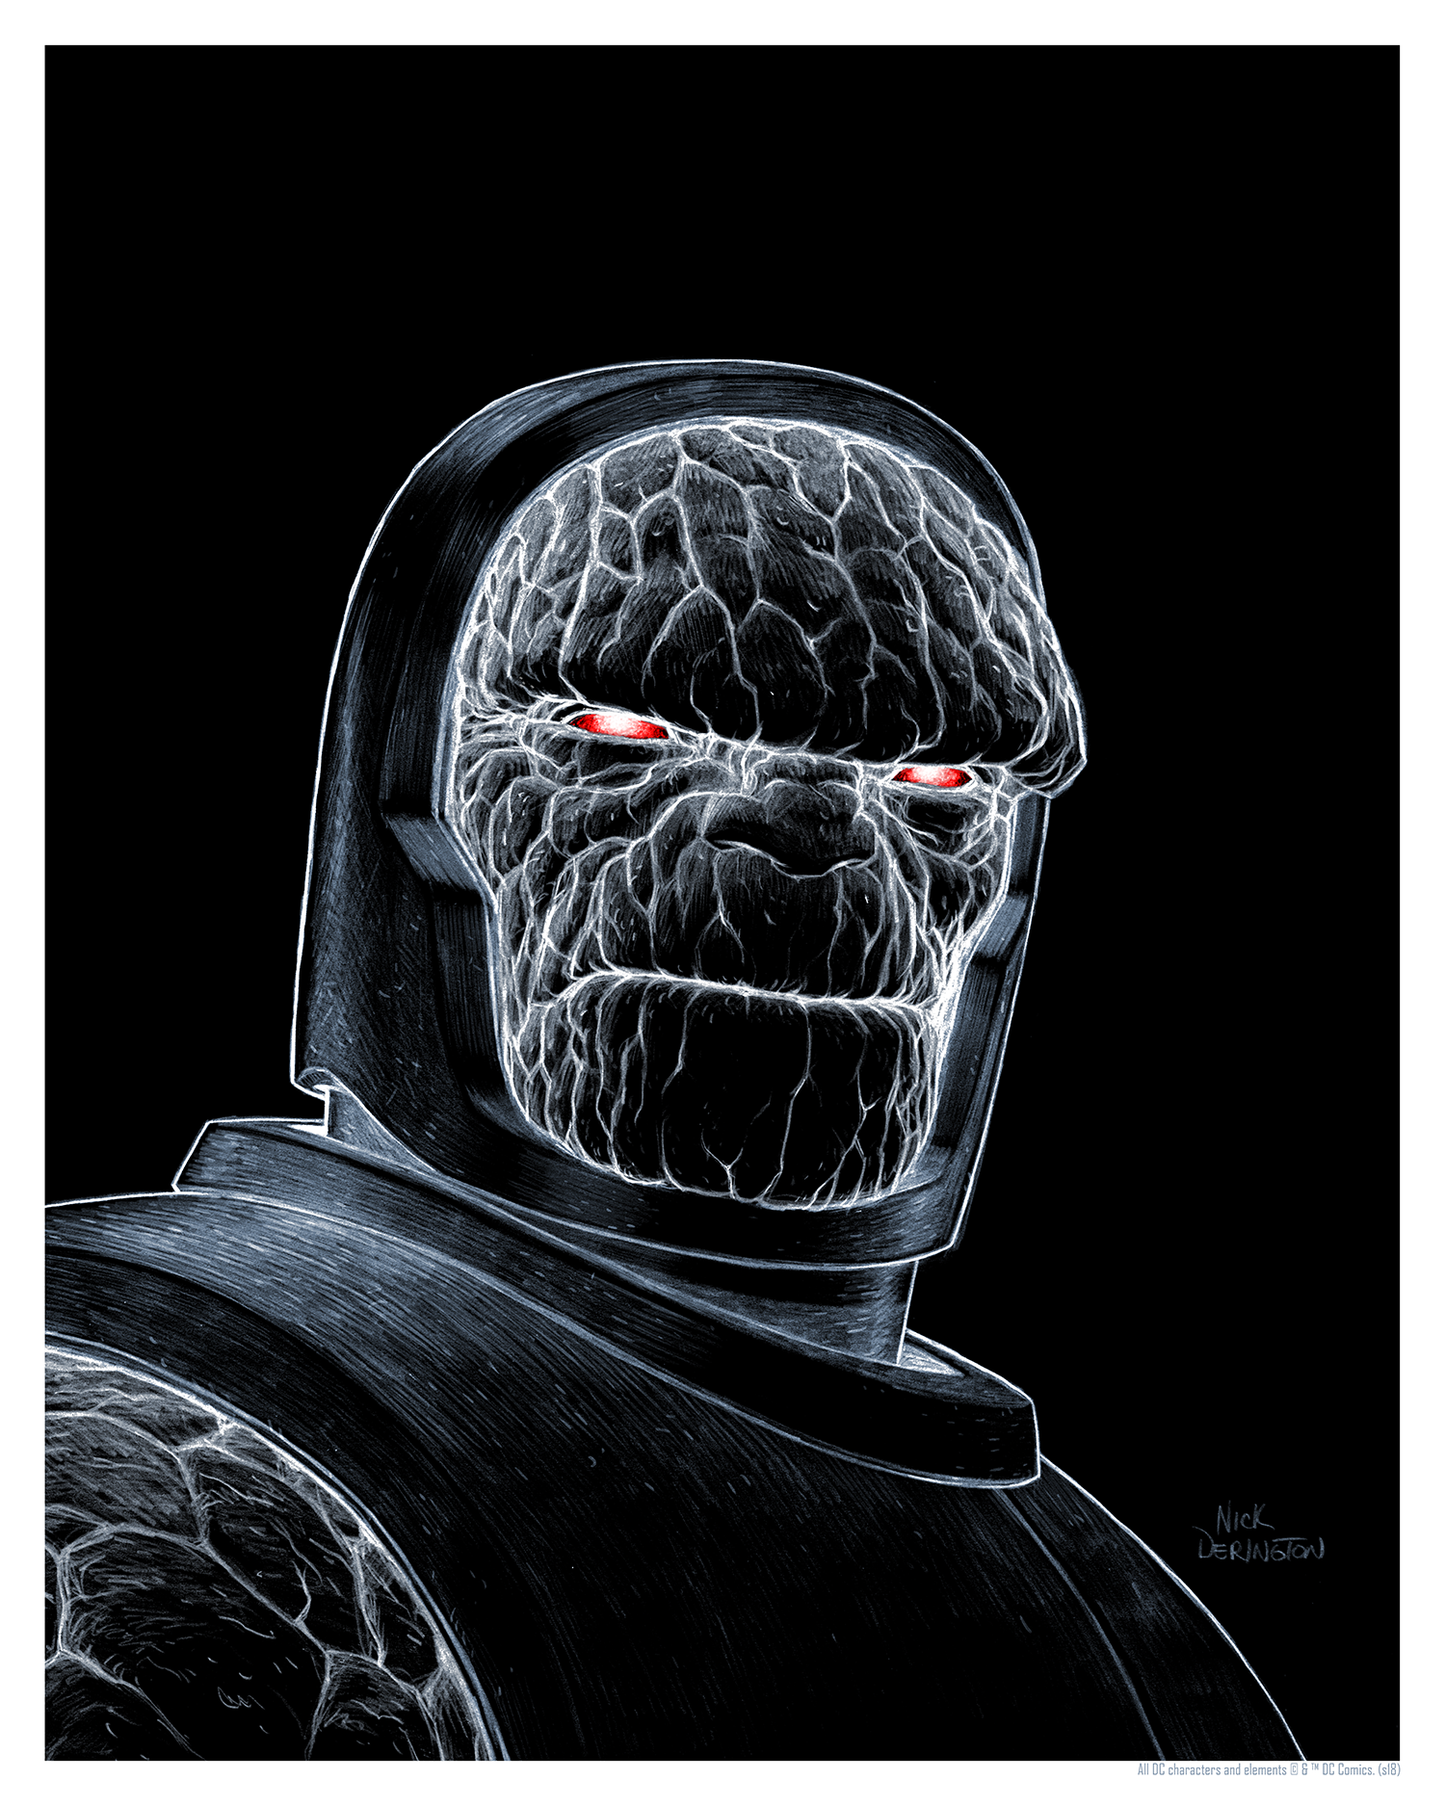 Nick Derington "Darkseid is..."